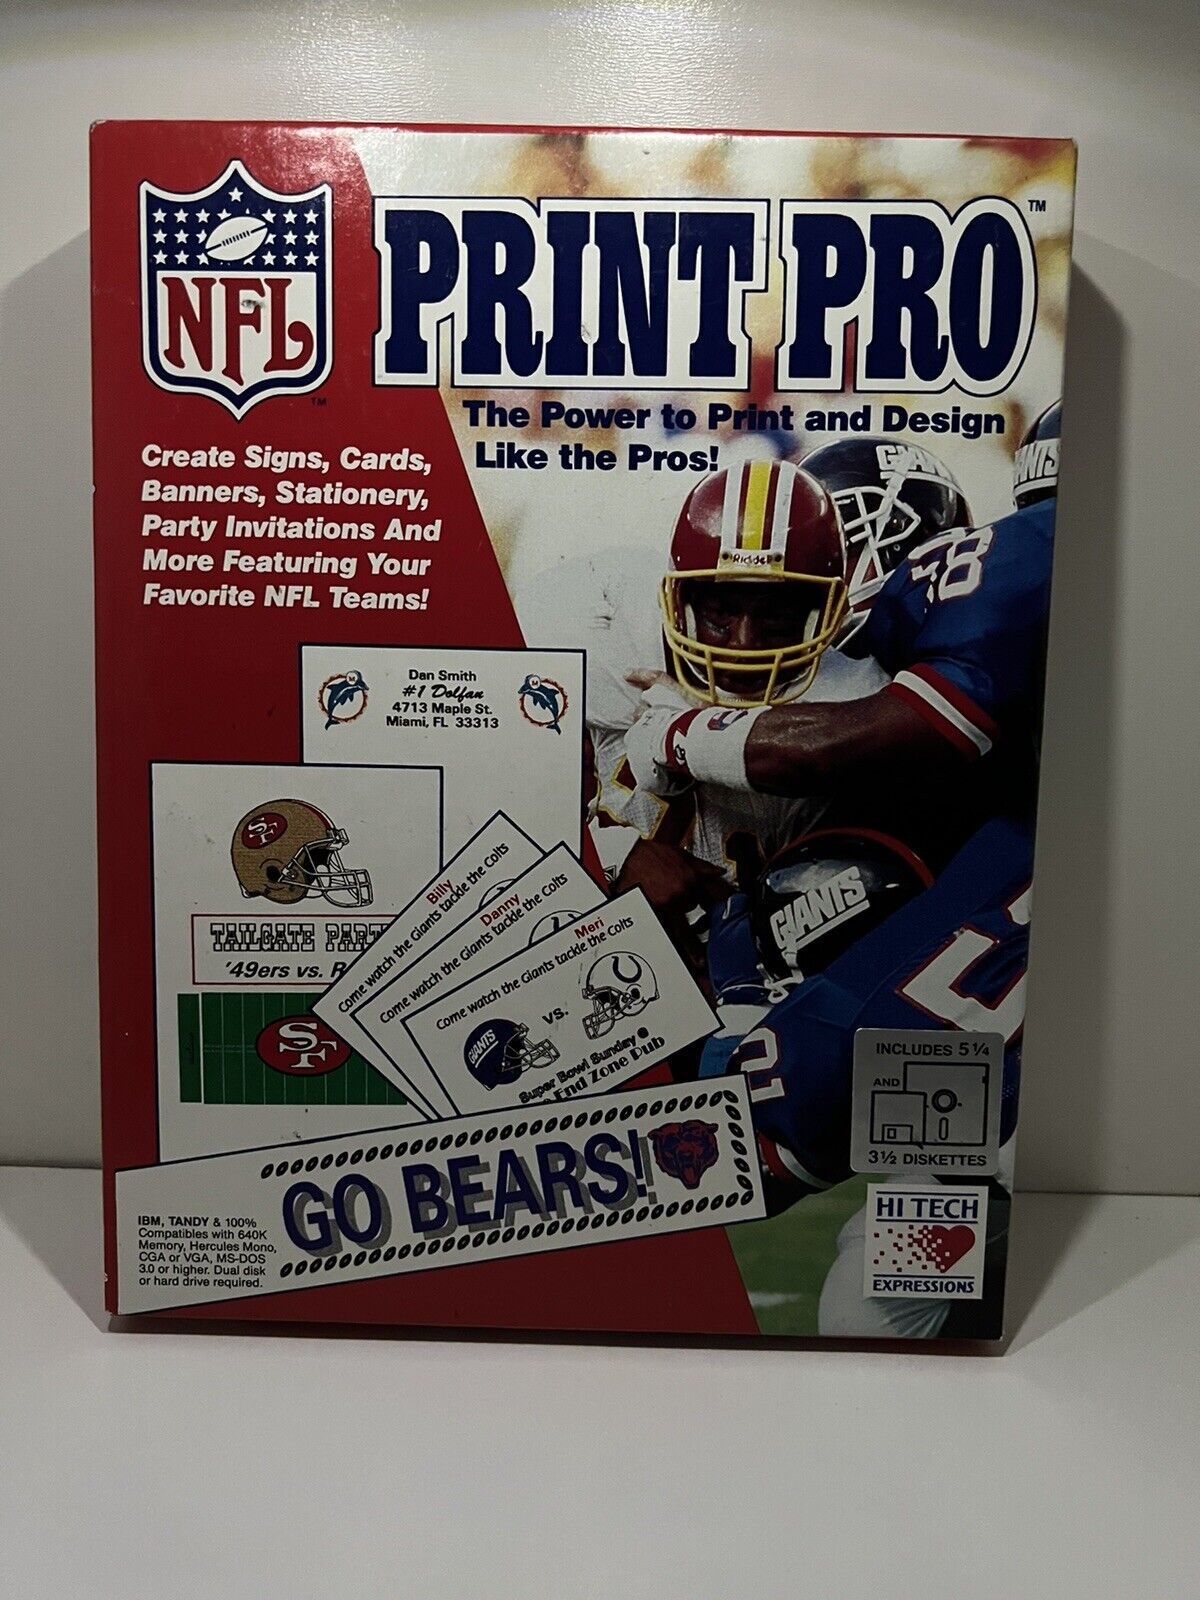 Vintage NFL Print Pro Hi Tech Expressions Floppy Disks w/Box & Registration Card